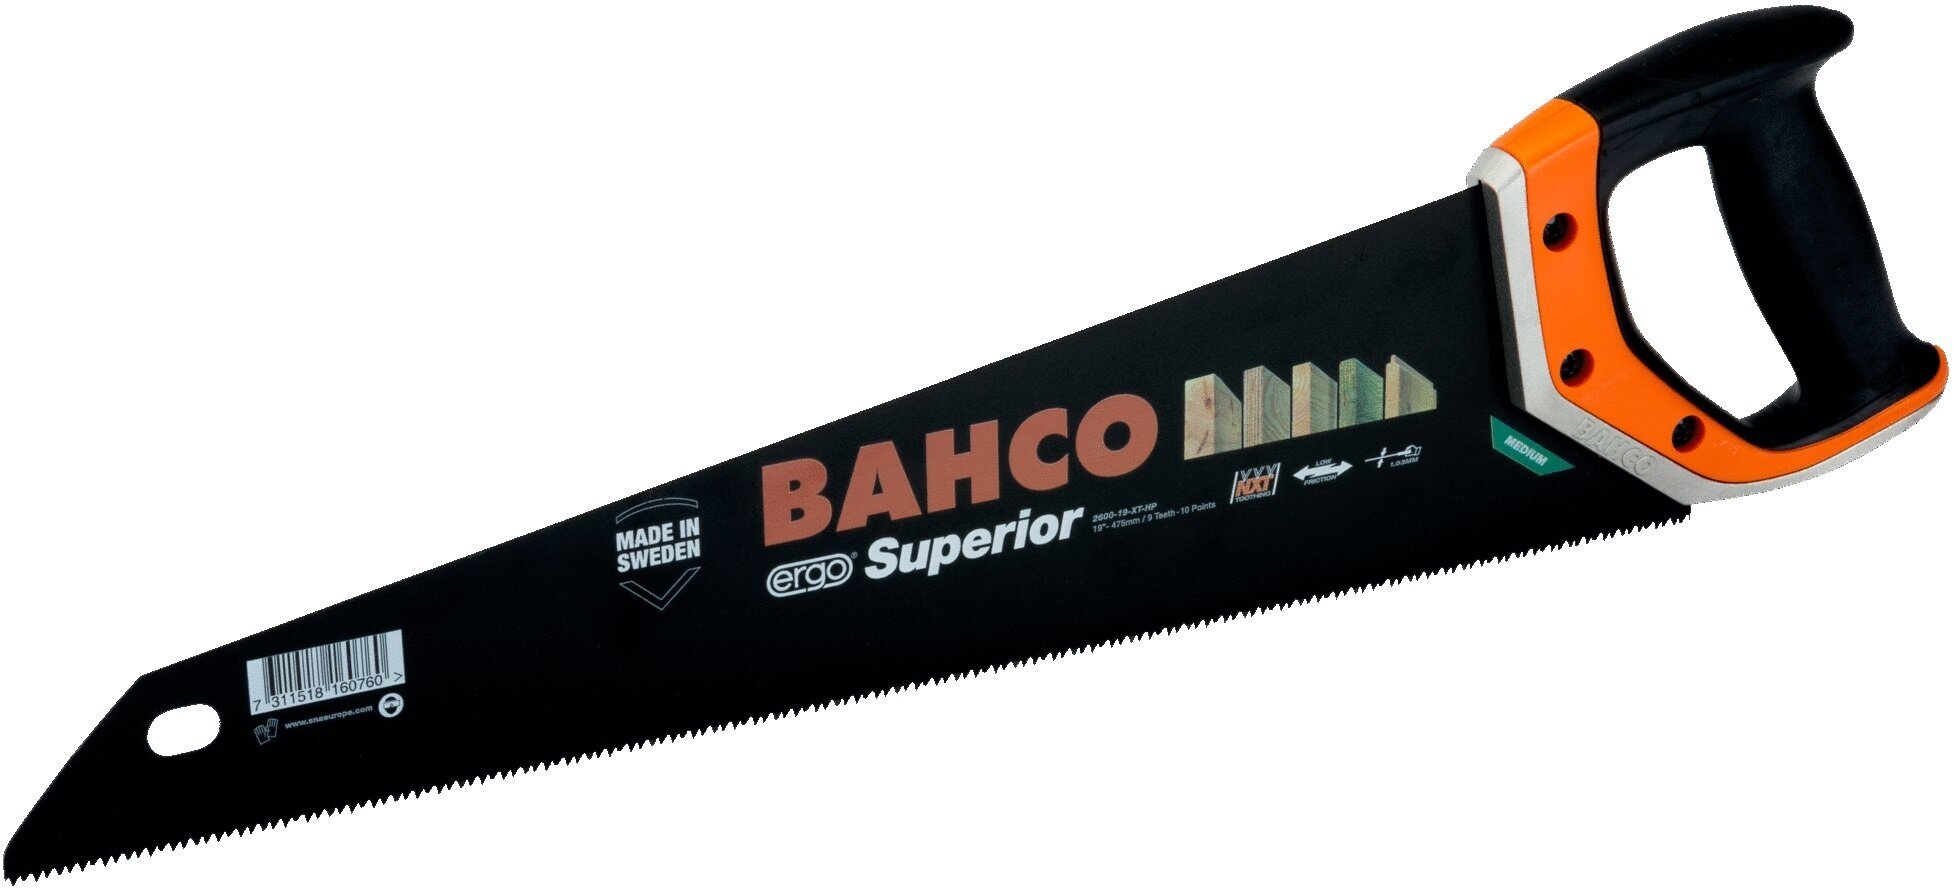 Универсальная ножовка Bahco - фото №2